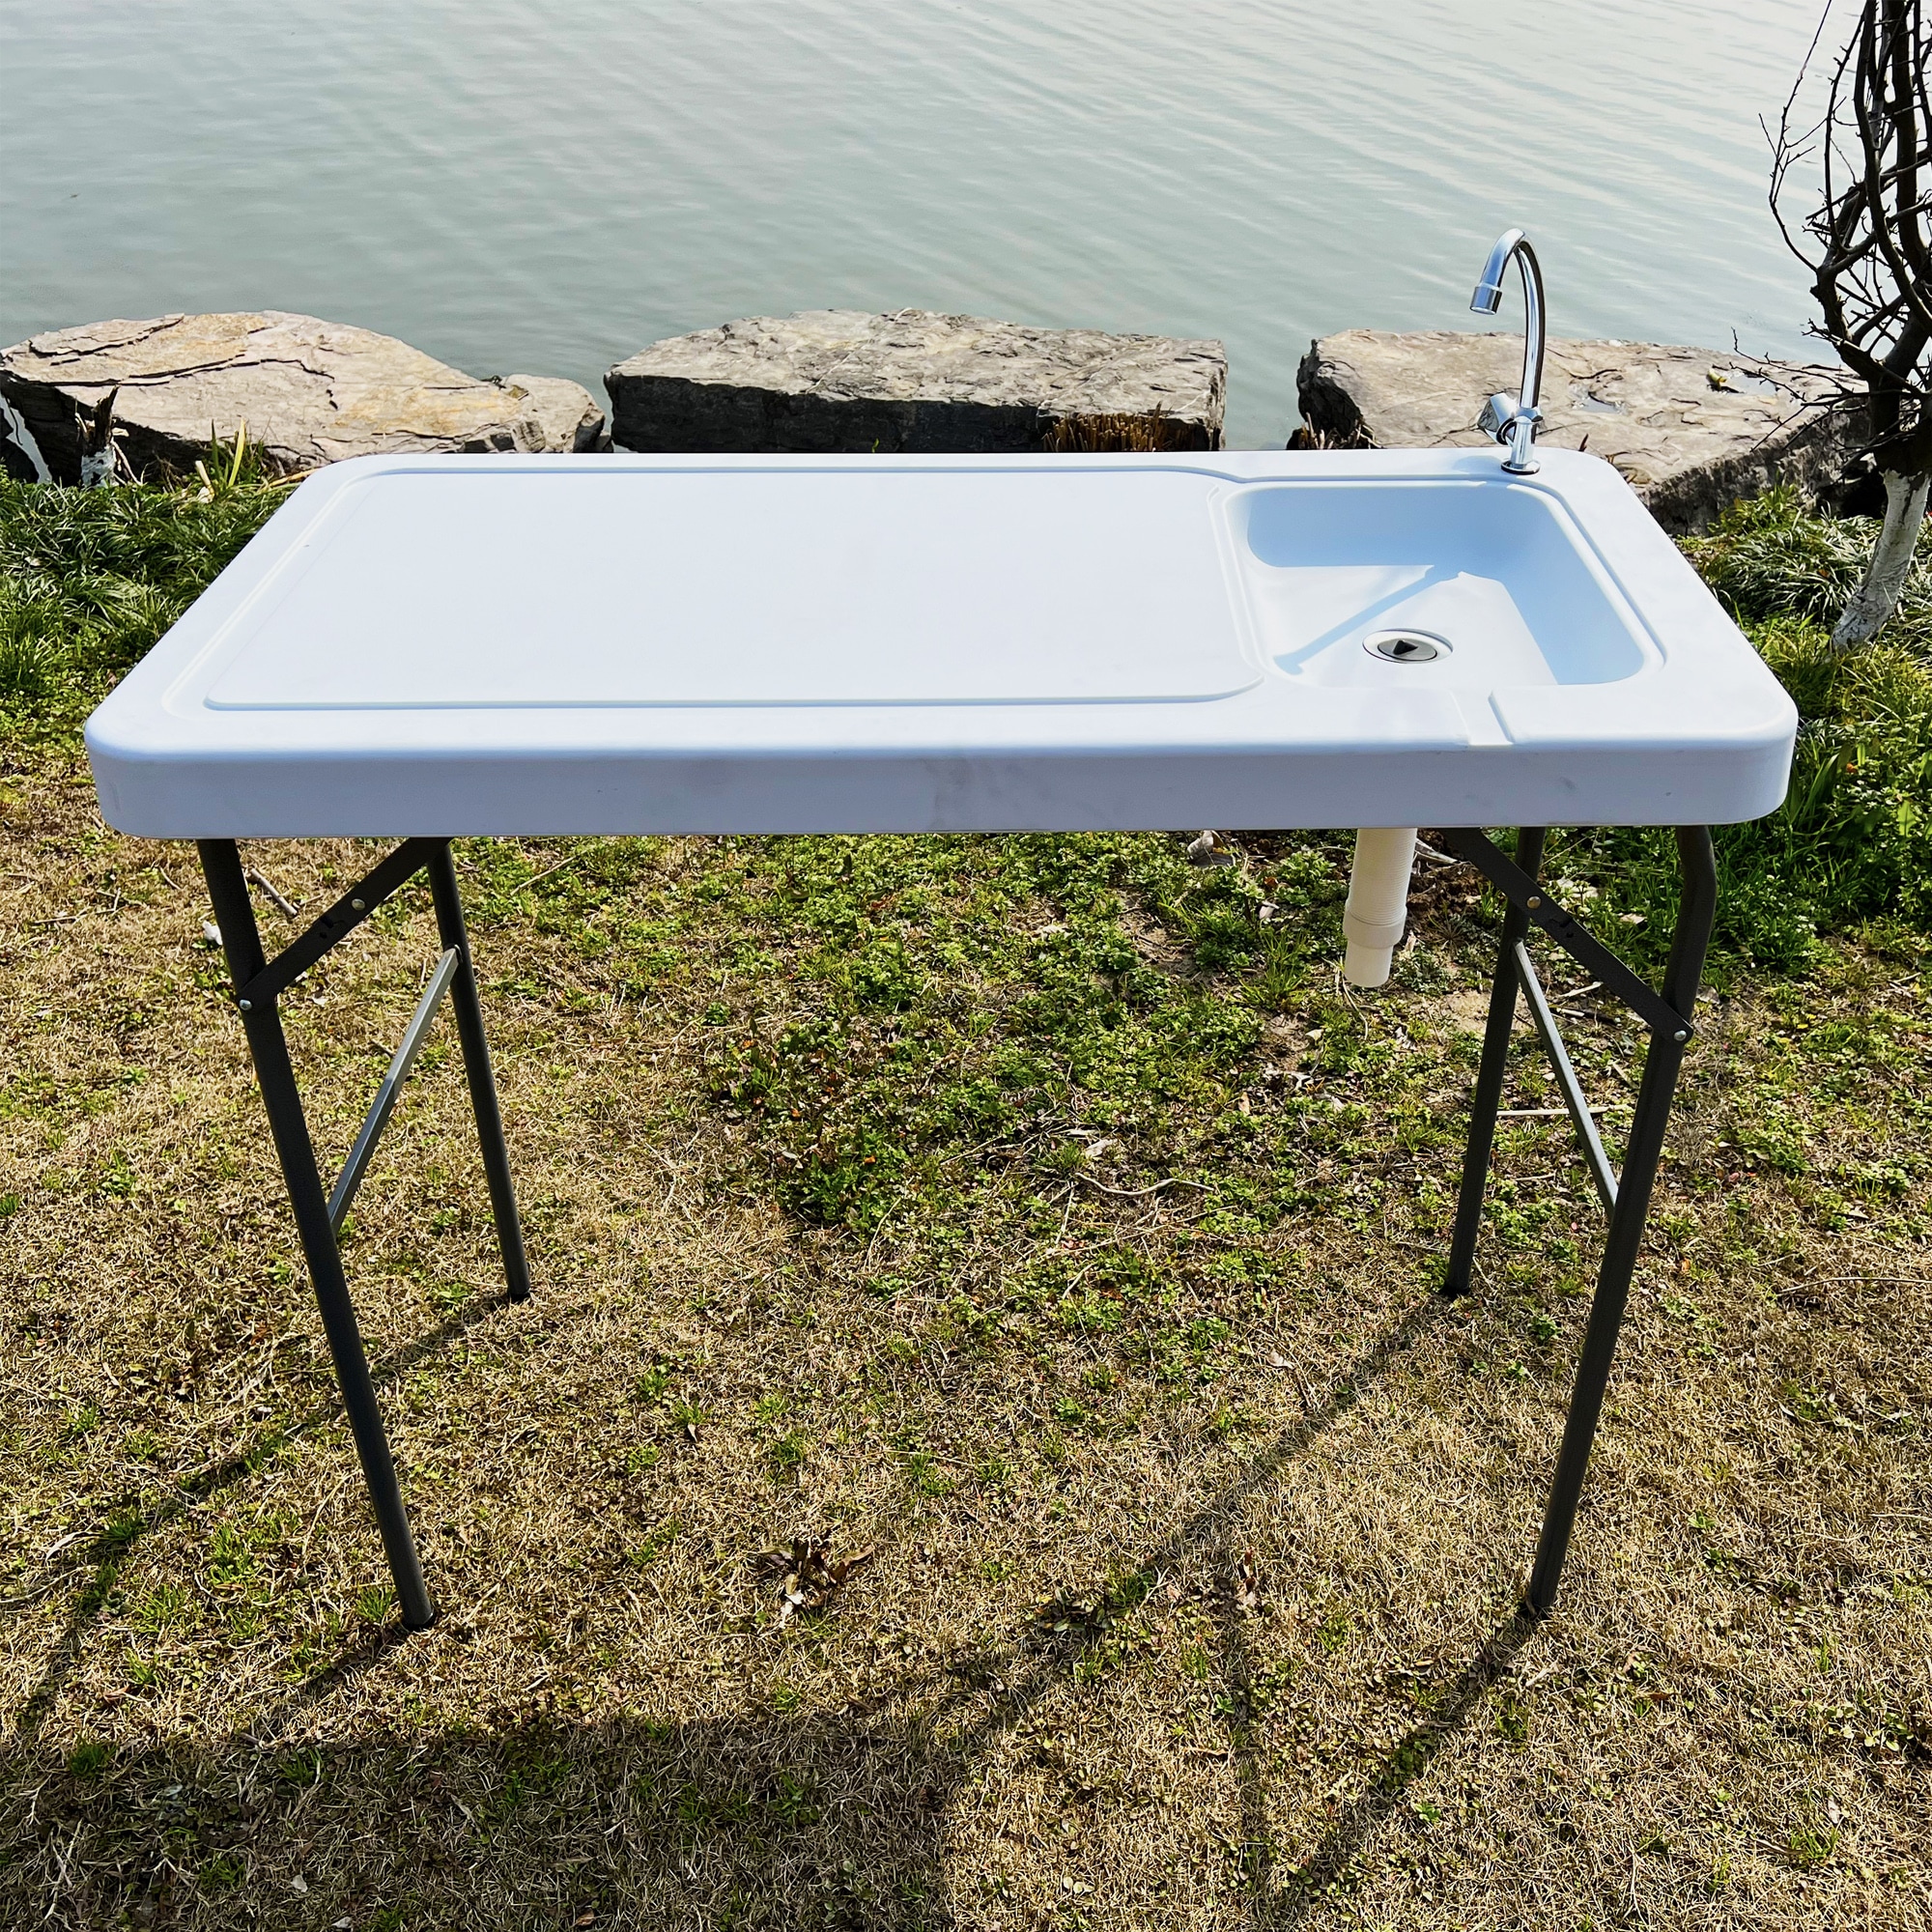 HONEY JOY Folding White Metal Camping Table Portable Fish Cleaning